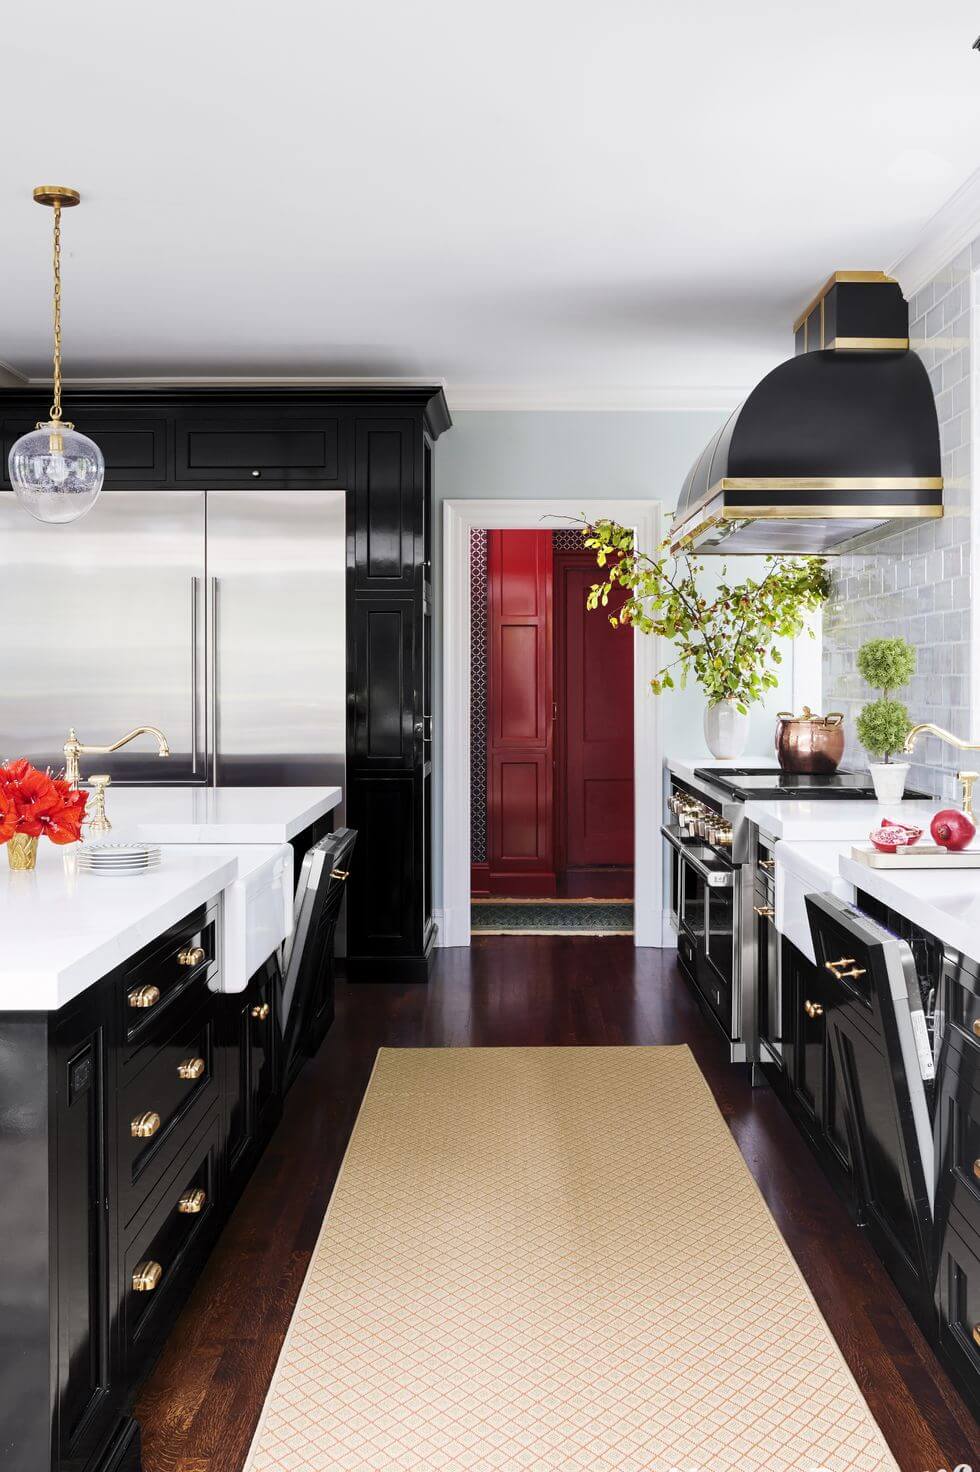 12 kitchen countertop ideas